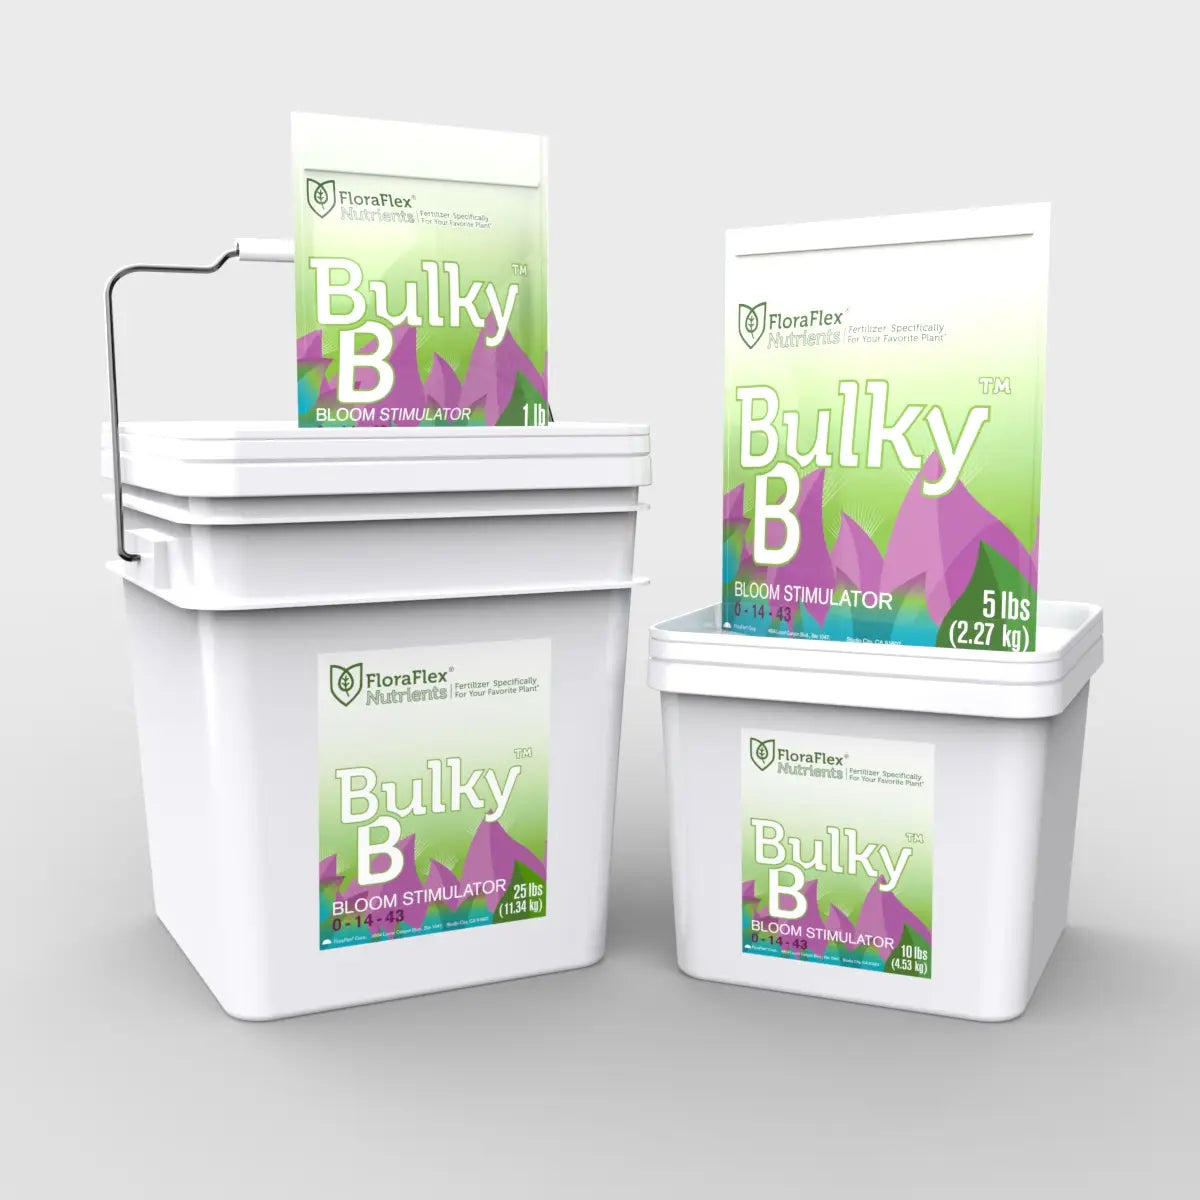 BULKY B™: BLOOM STIMULATORBULKY-5lbs